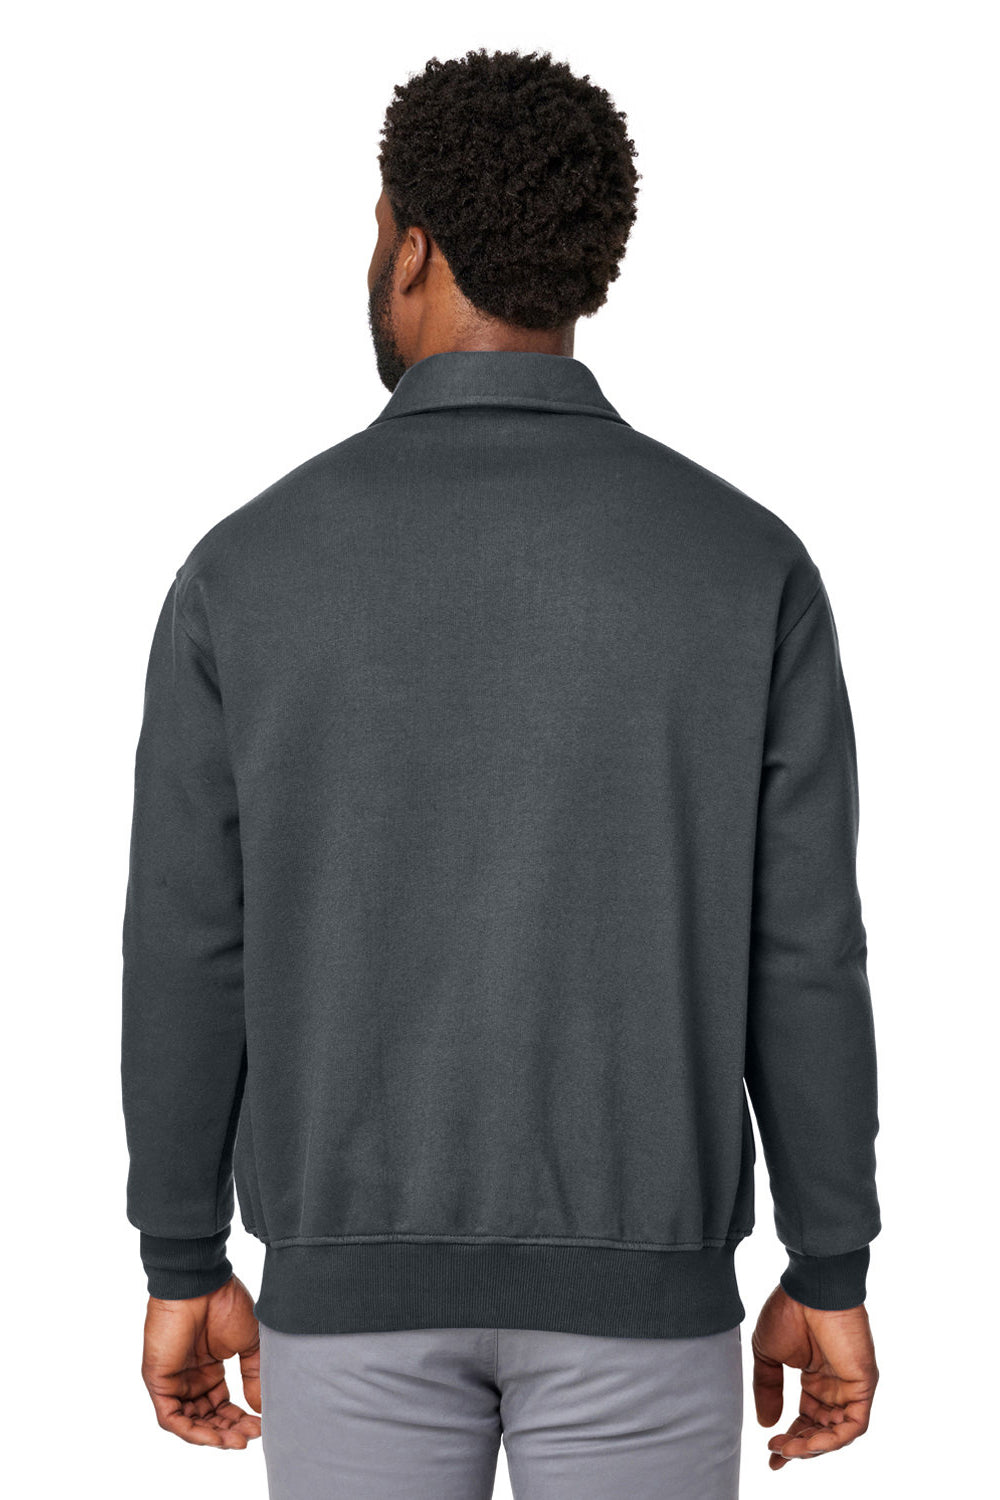 Harriton M712 Mens Climabloc 1/4 Zip Sweatshirt Dark Charcoal Grey Back